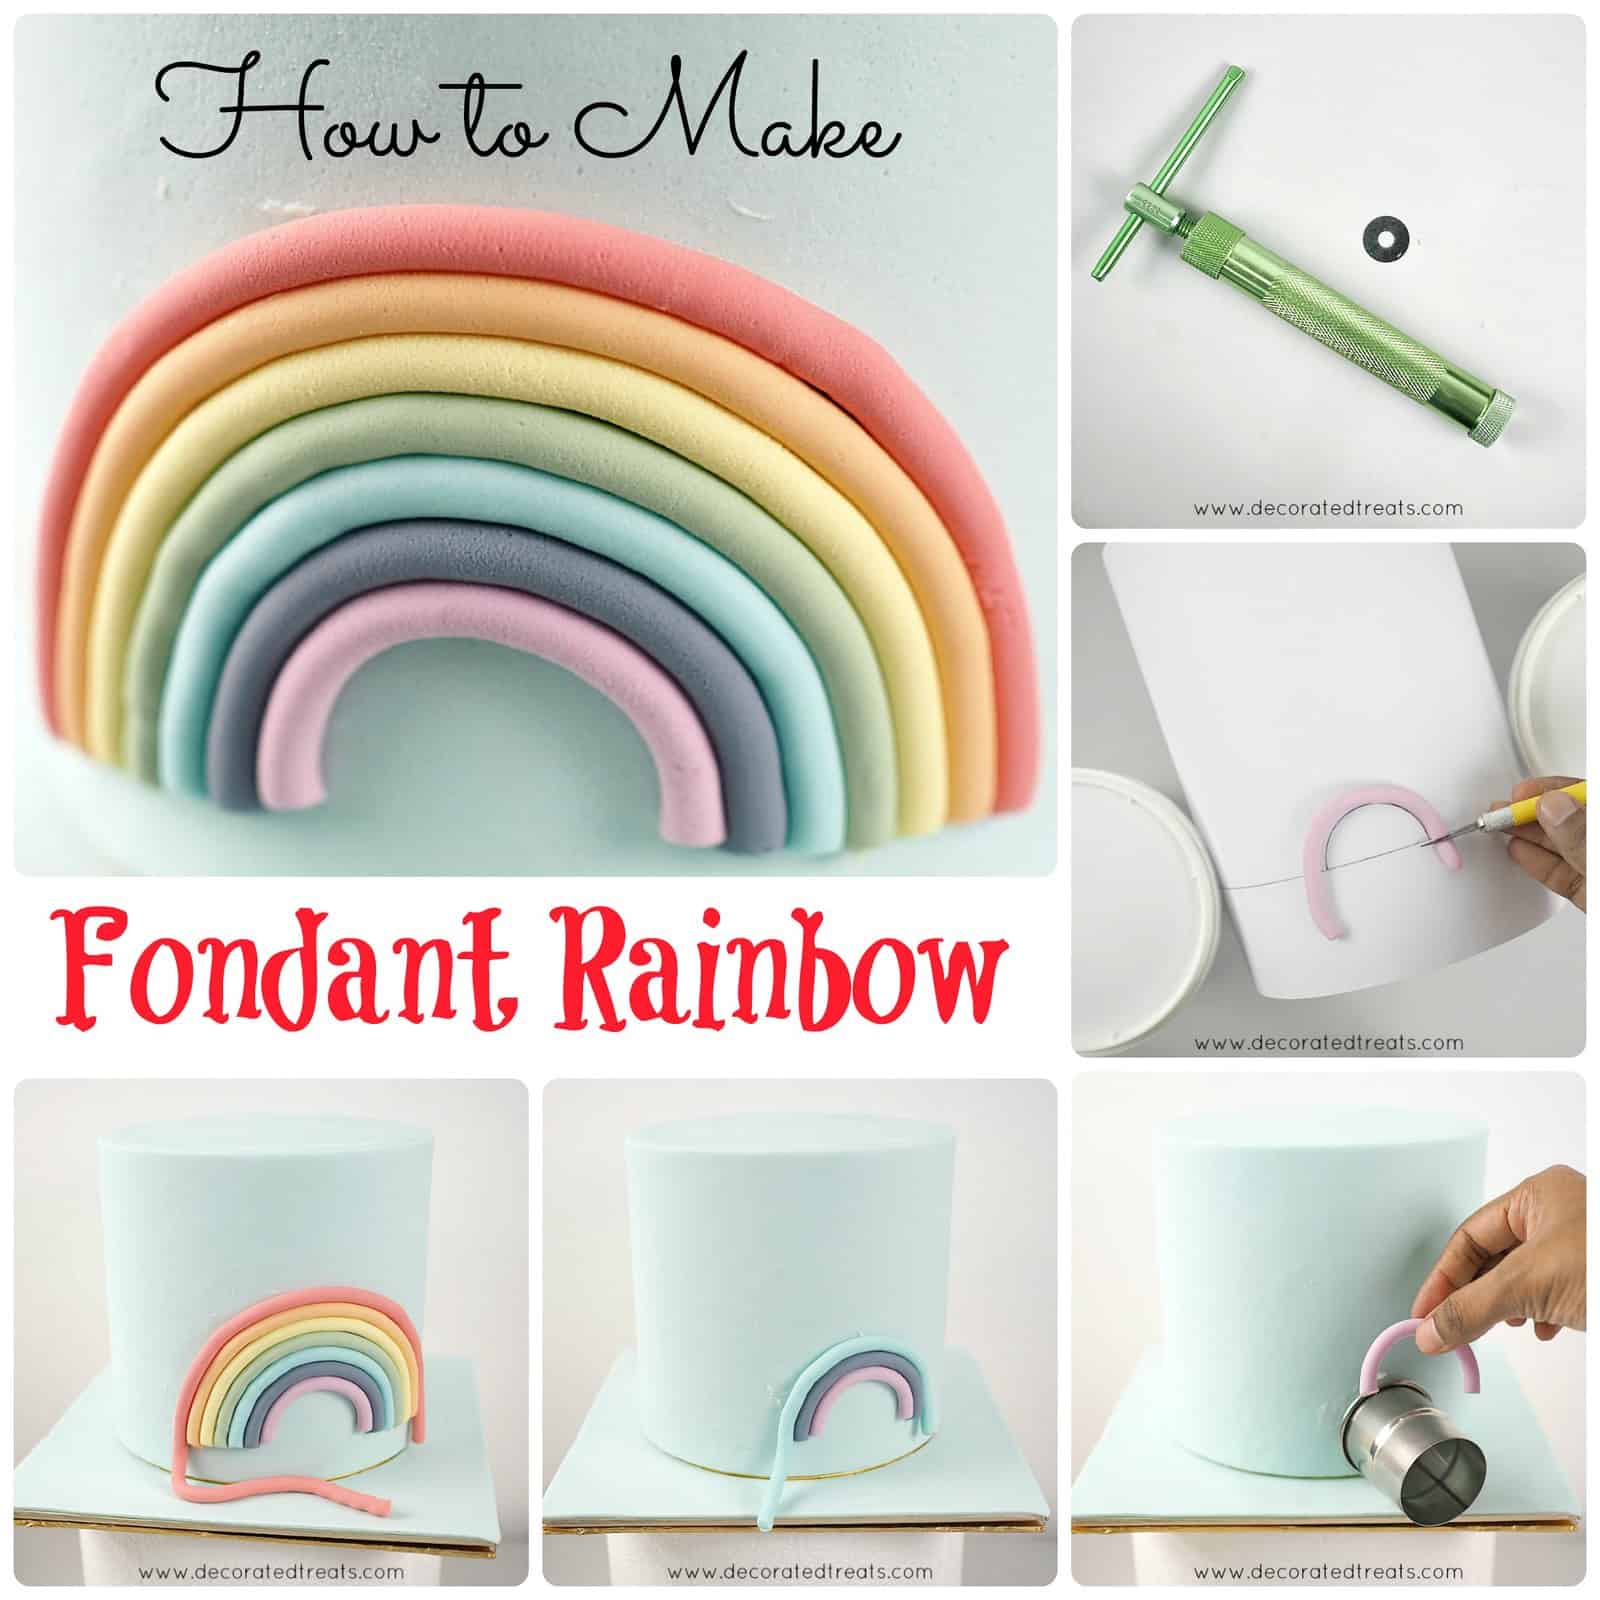 Fondant Rainbow - A Step by Step Tutorial - Decorated Treats